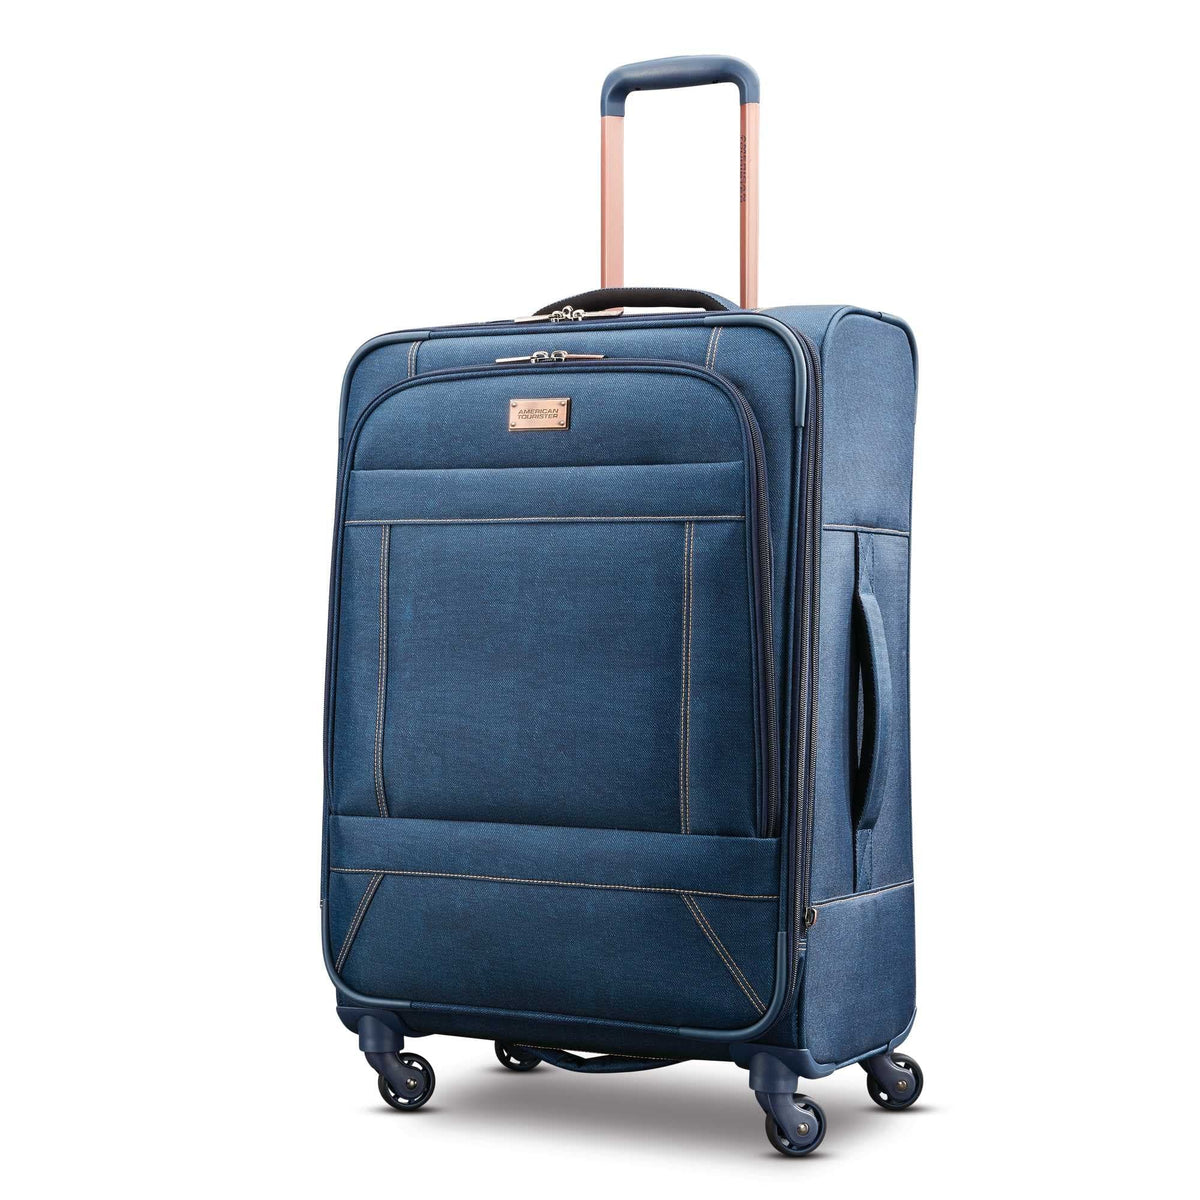 American Tourister Belle Voyage 25 Spinner Luggage Blue Denim